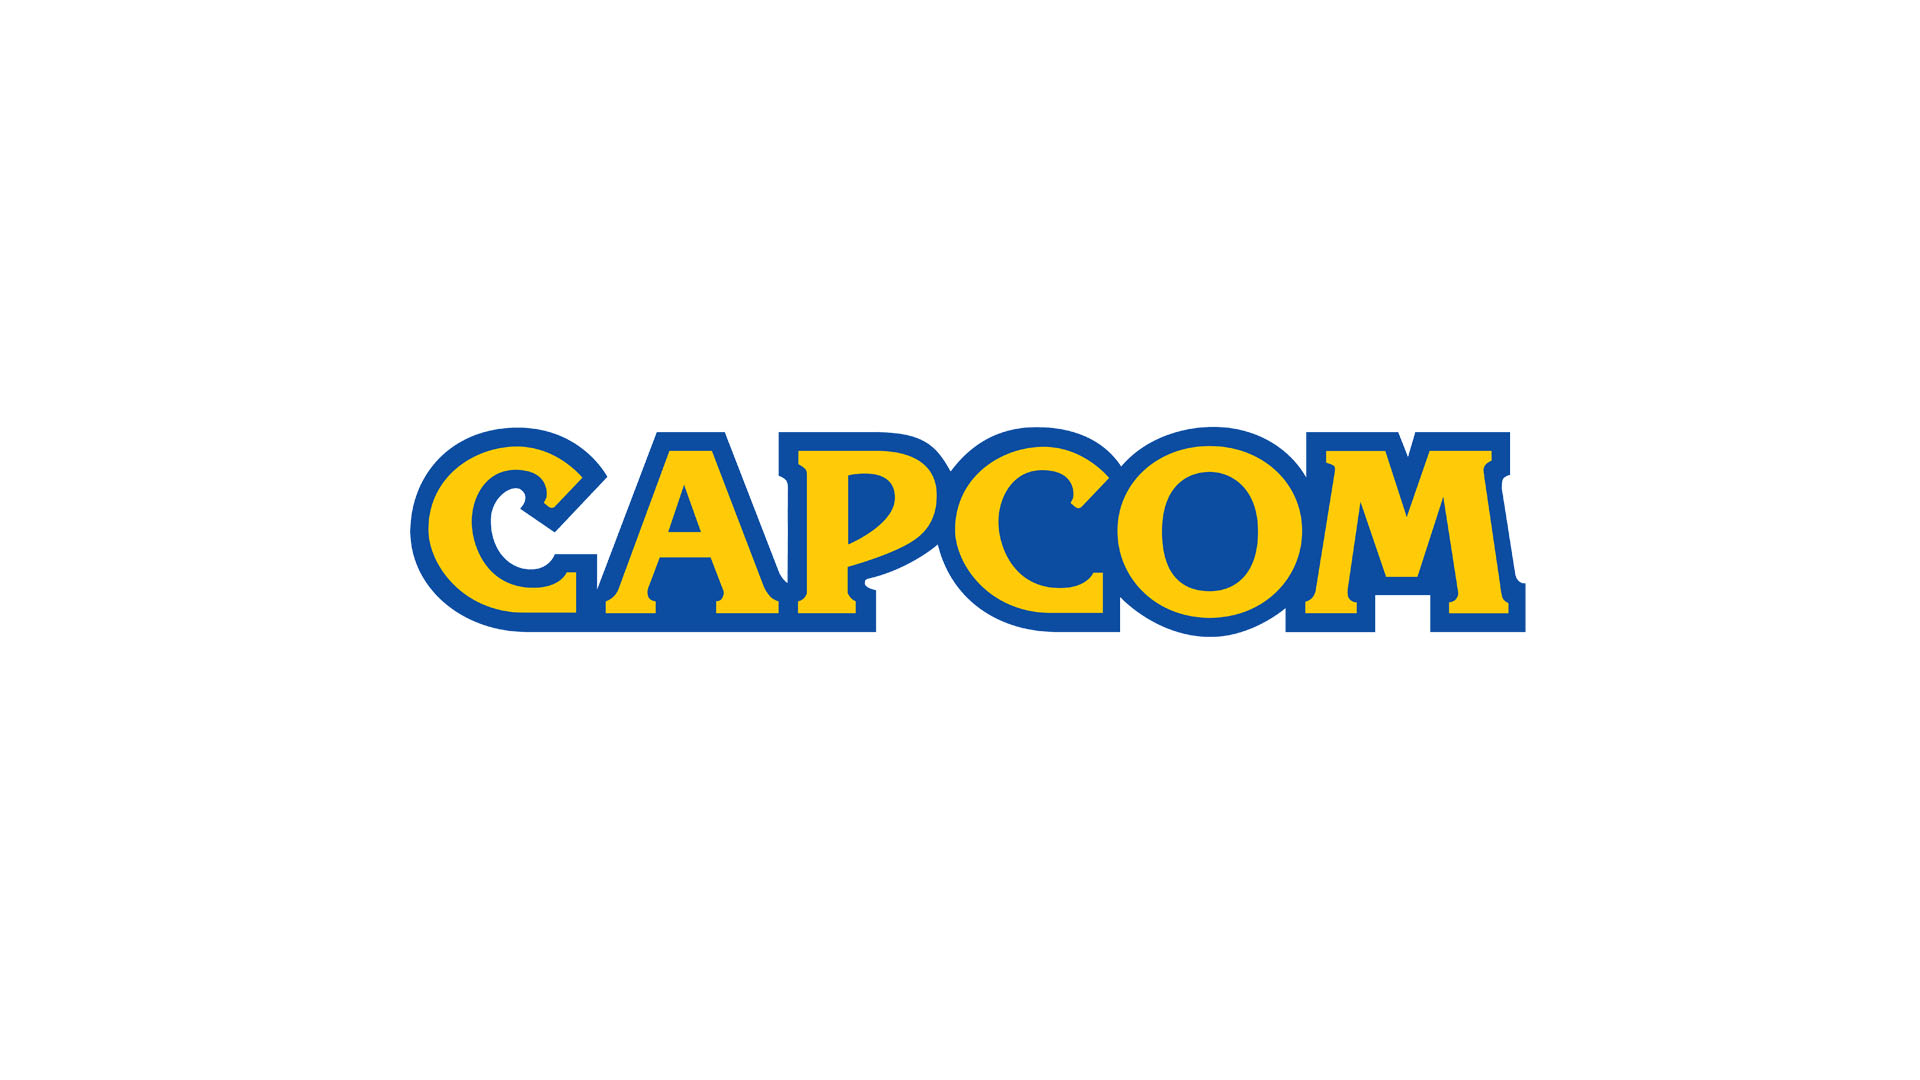 Capcom : la cyberattaque de novembre dernier a touché 390 000 personnes